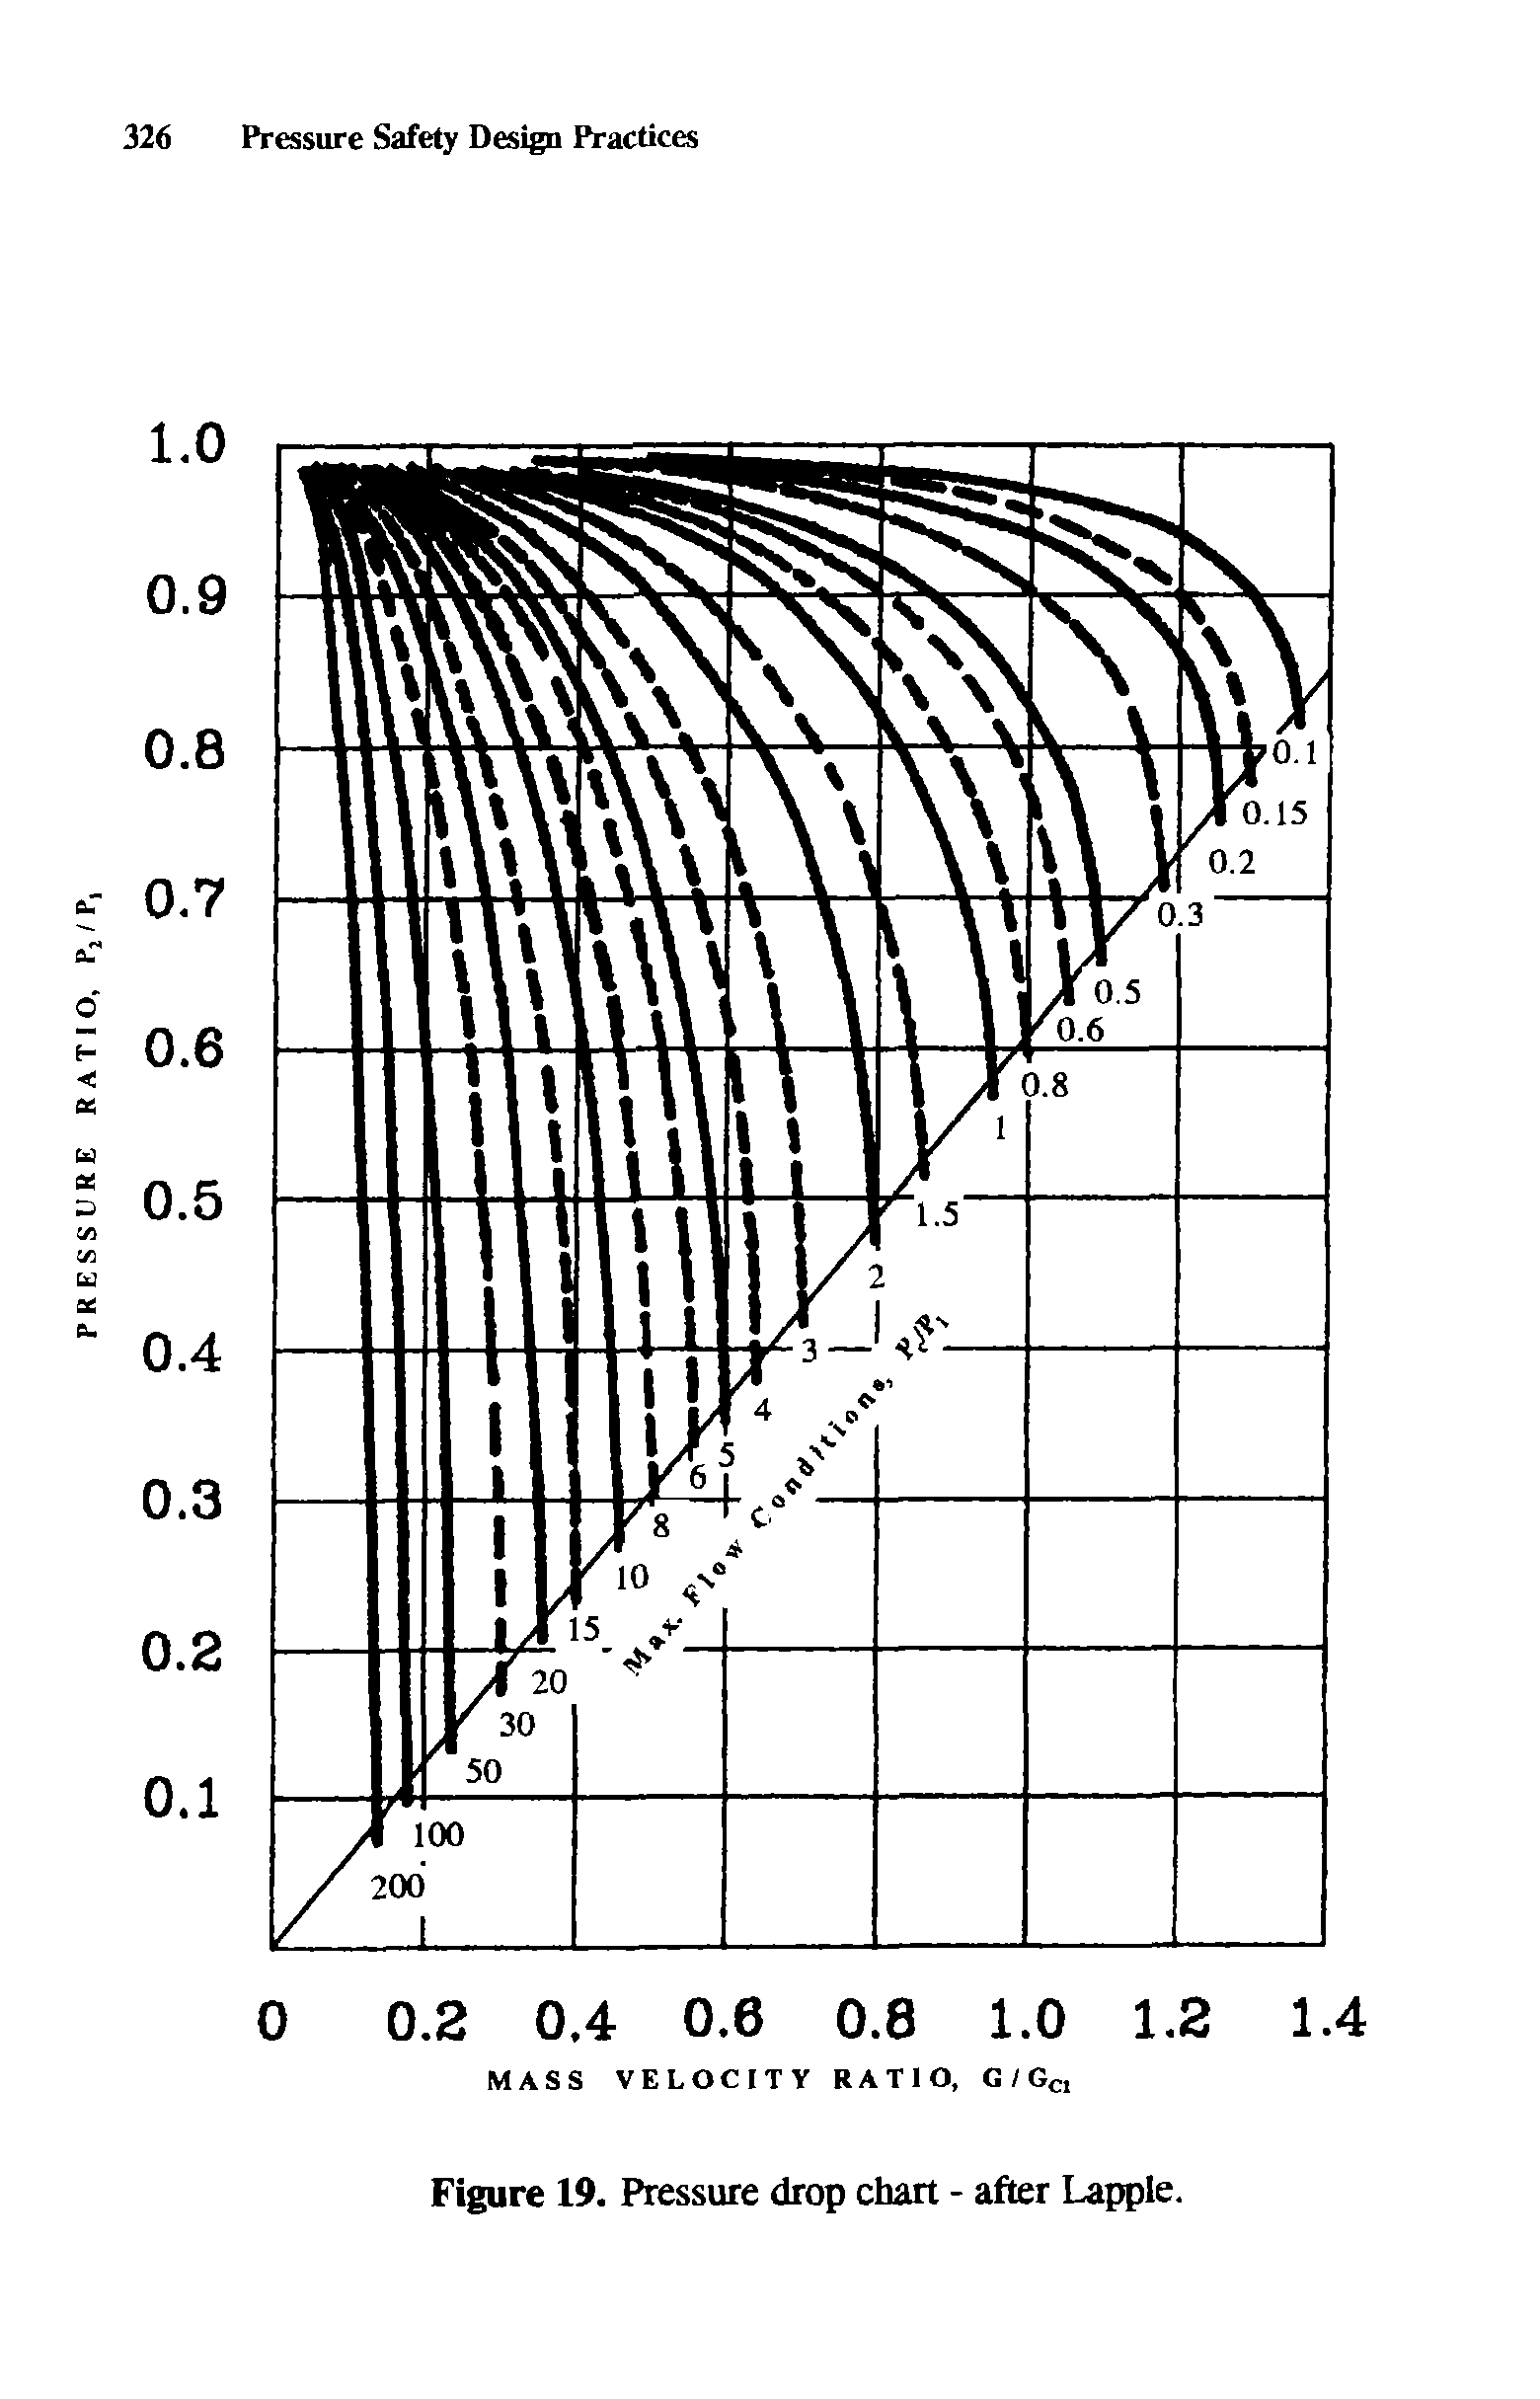 Figure 19. Pressure drop chart - after Lapple.